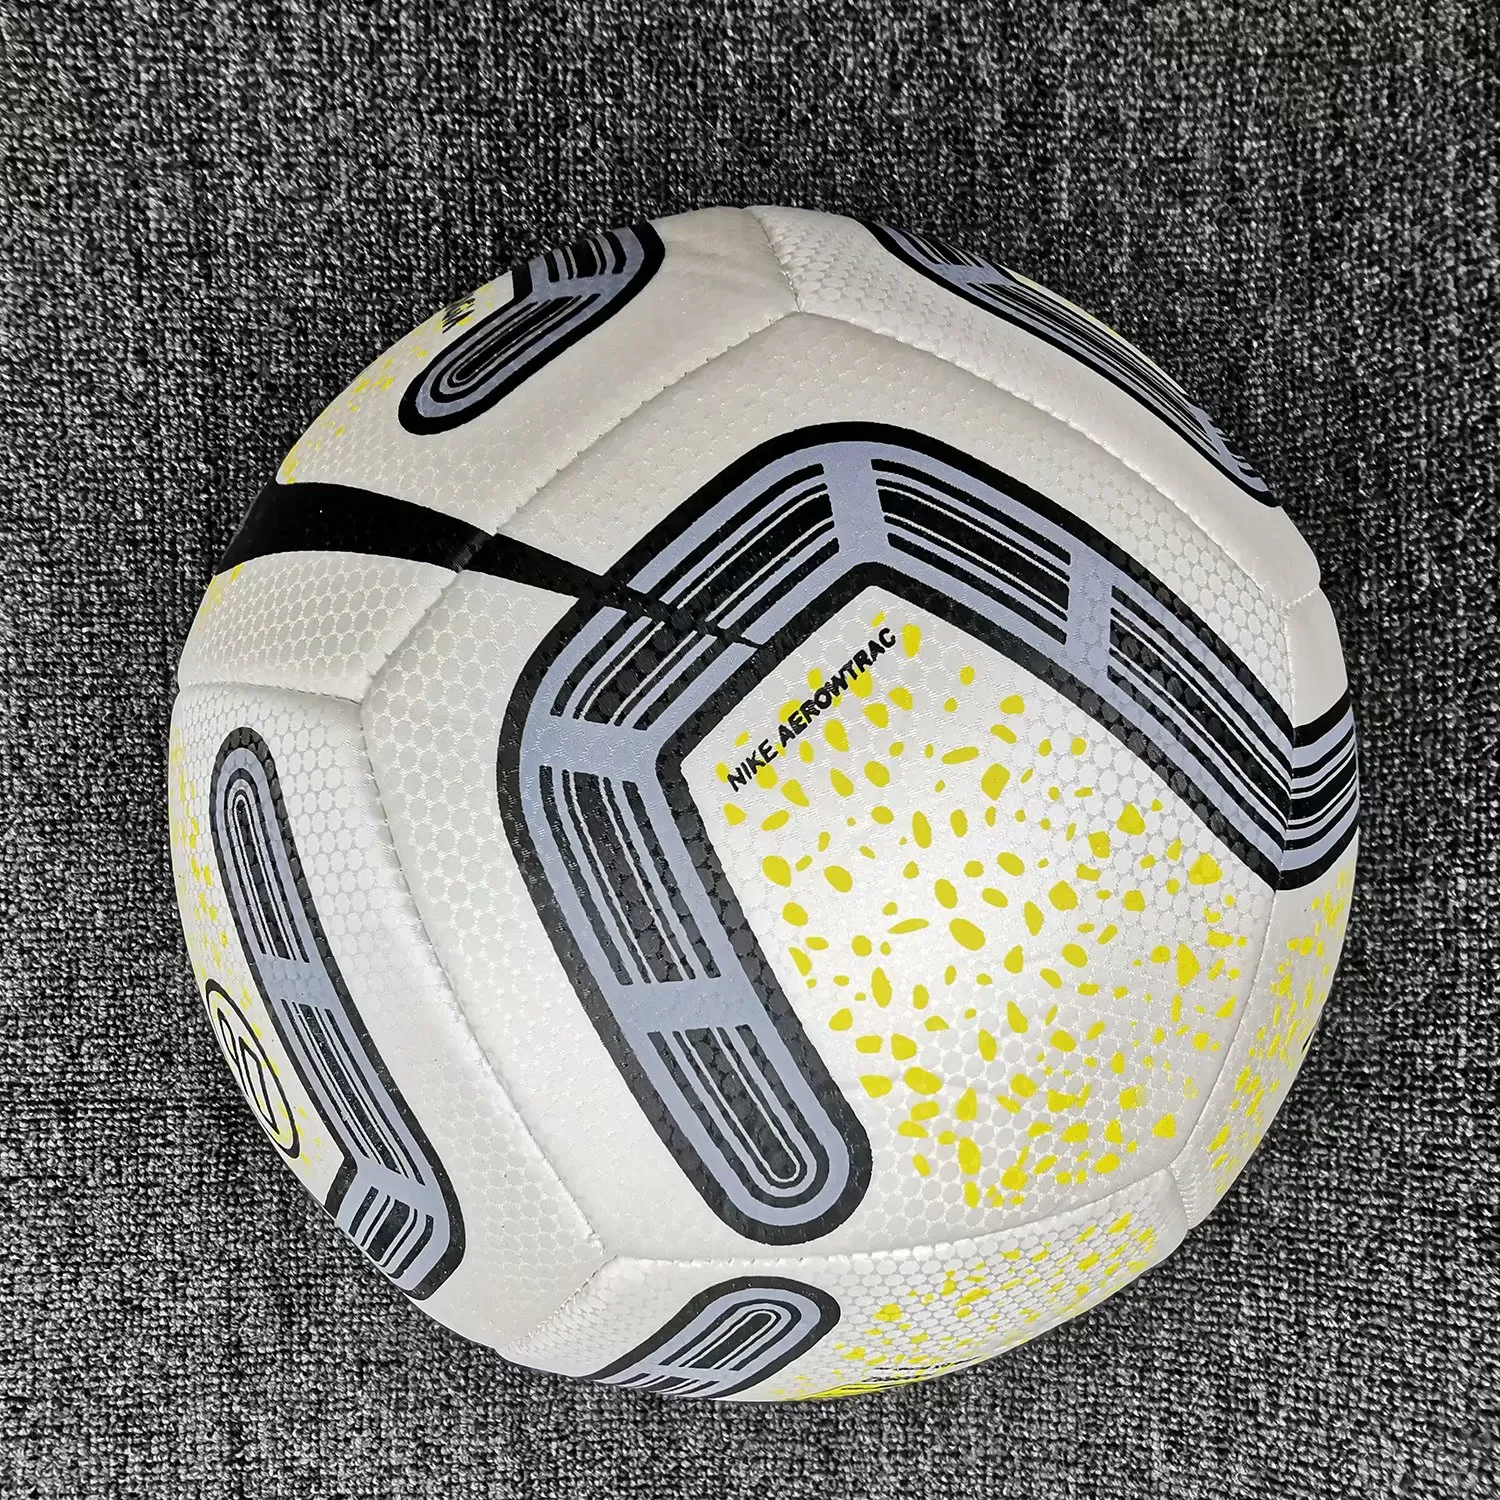 quality European Cup Soccer ball 2020 pu size 5 balls granules slipresistant football high quality ball Eu9368989